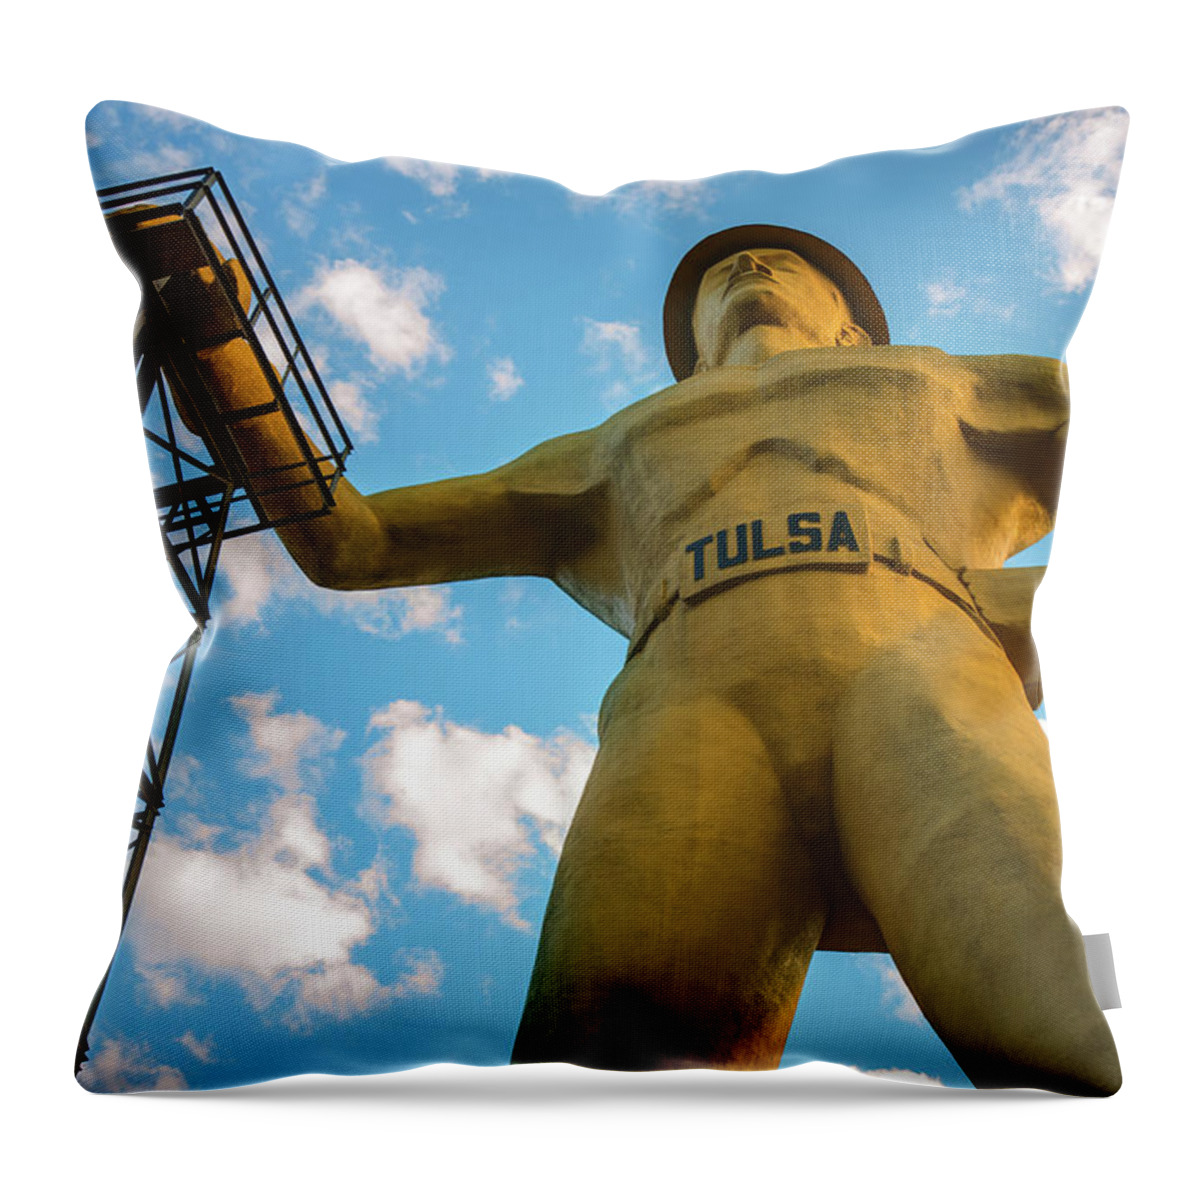 Tulsa Golden Driller Throw Pillow featuring the photograph Giant Tulsa Driller Statue - Color Edition by Gregory Ballos